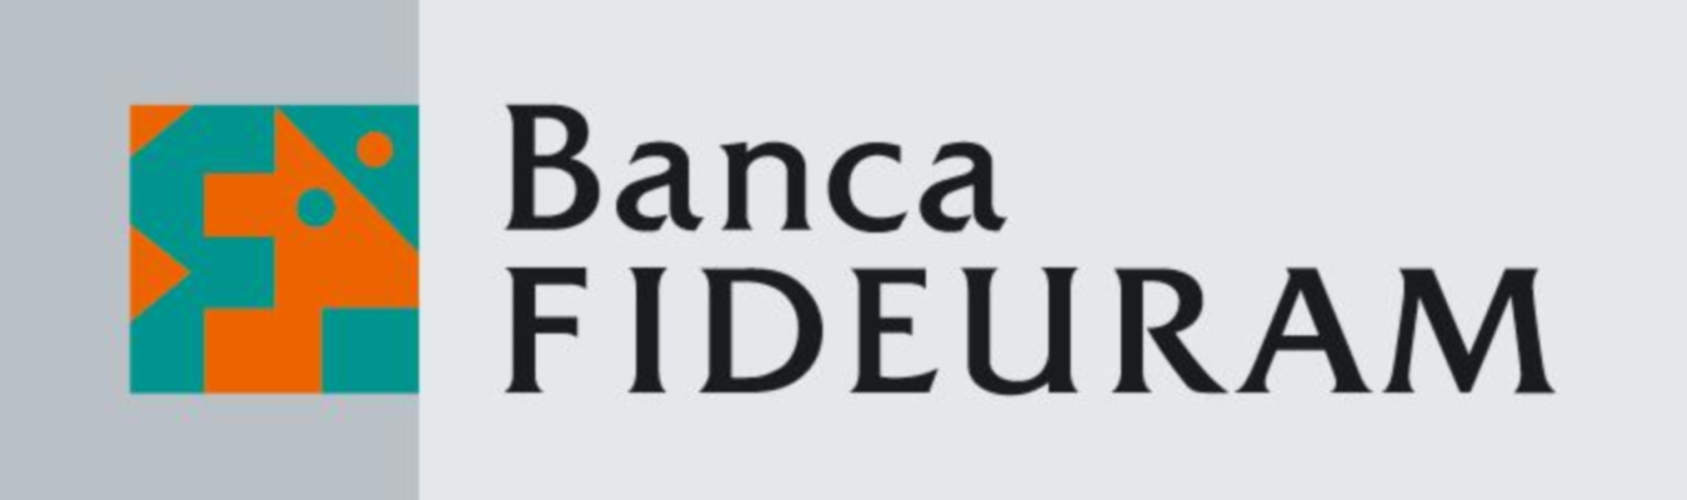 Banca Fideuram Brand Logo